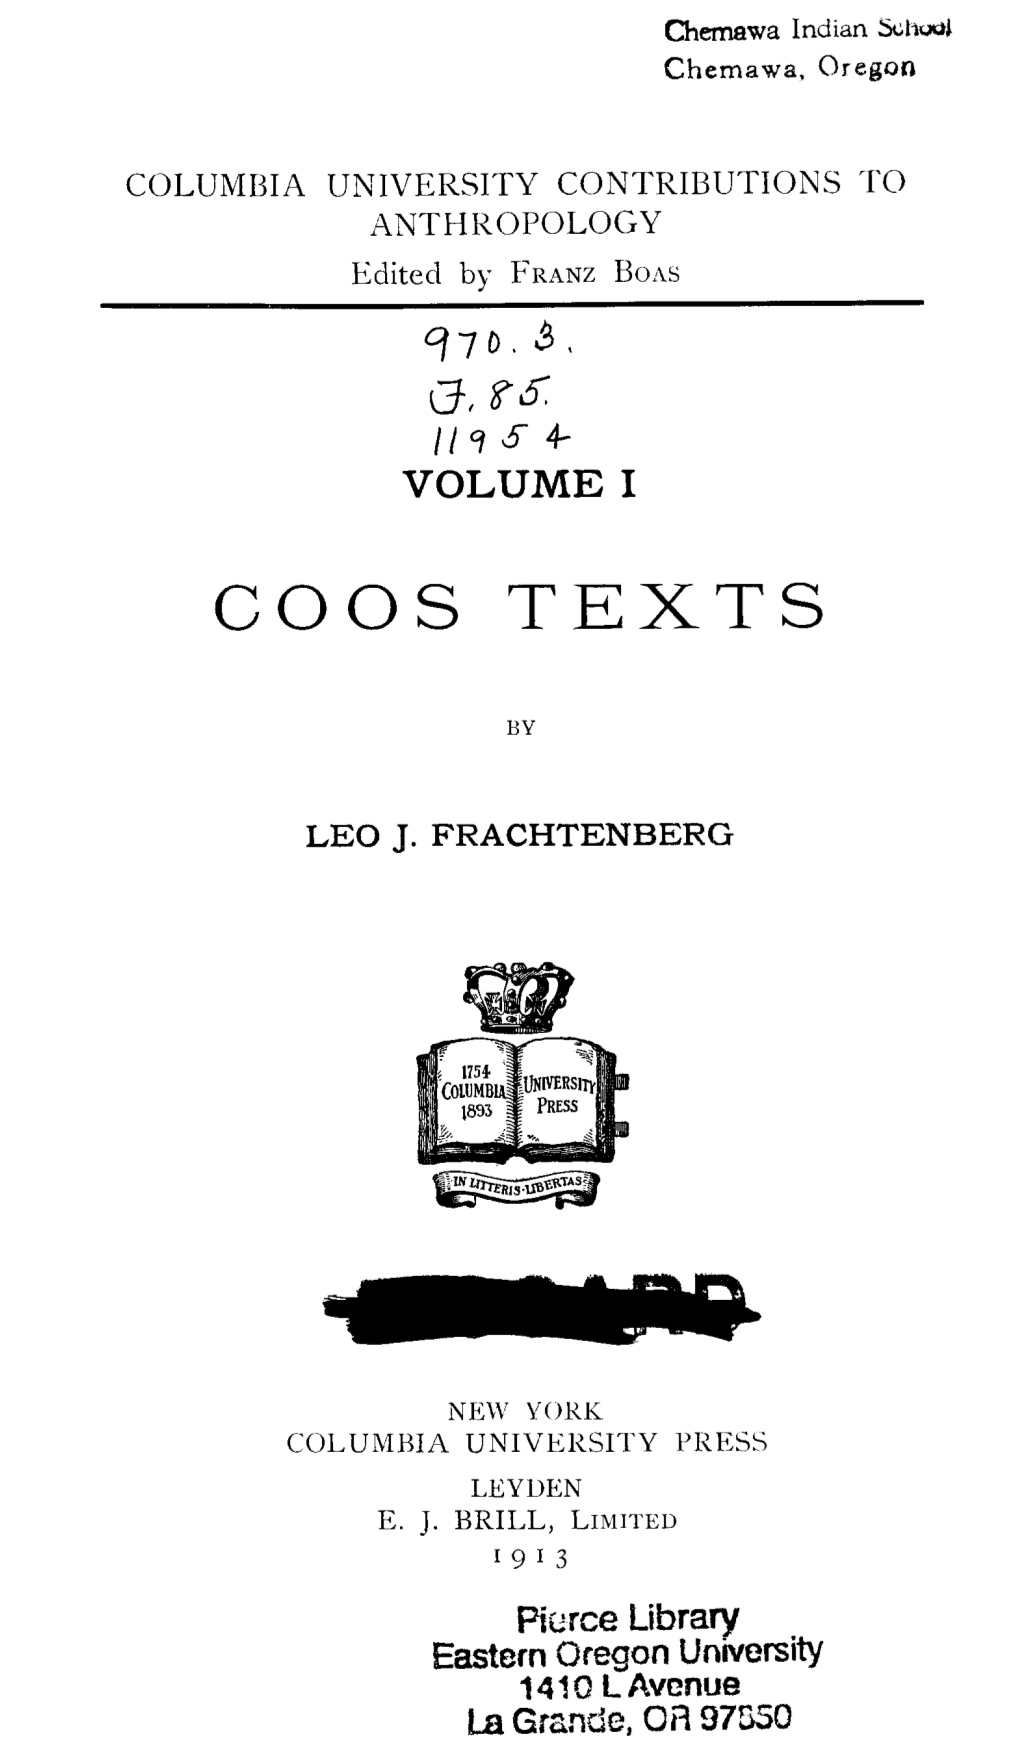 Coos Texts, 1913